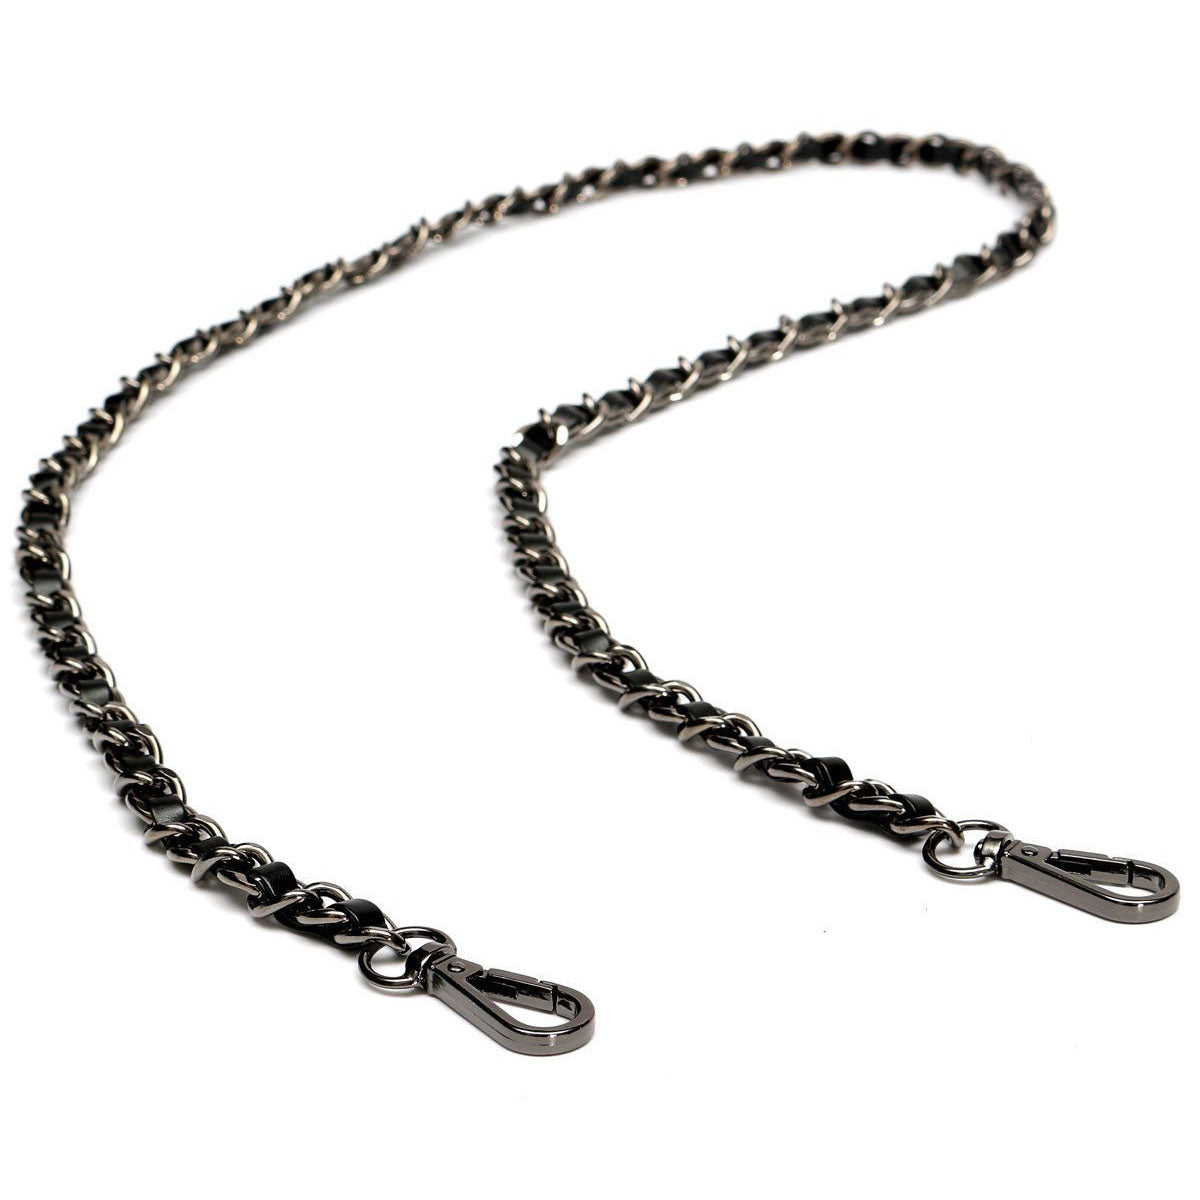 Leather Chain Purse Cross-body Handbag Shoulder Bag Strap Replacement Accessories 120cm,black - ebowsos